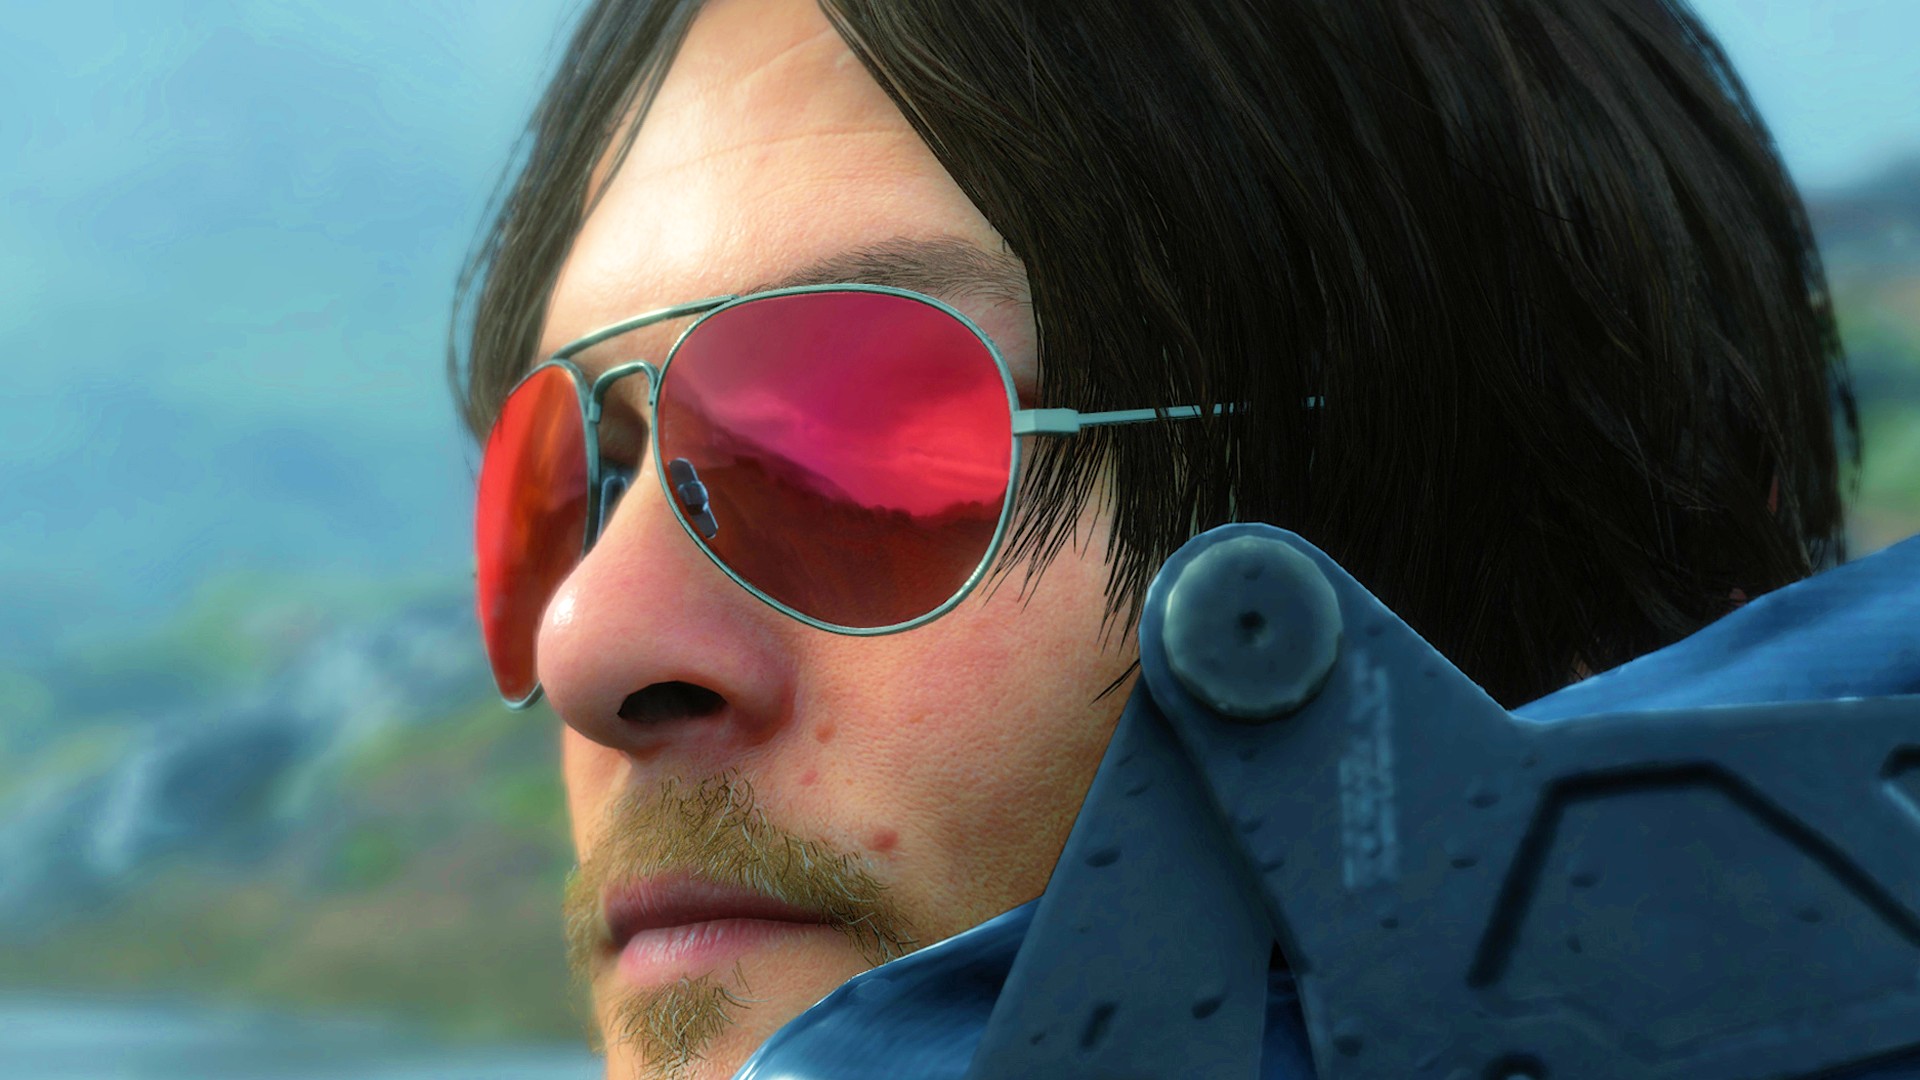 Death Stranding, MGS creator Hideo Kojima confirms VR project for